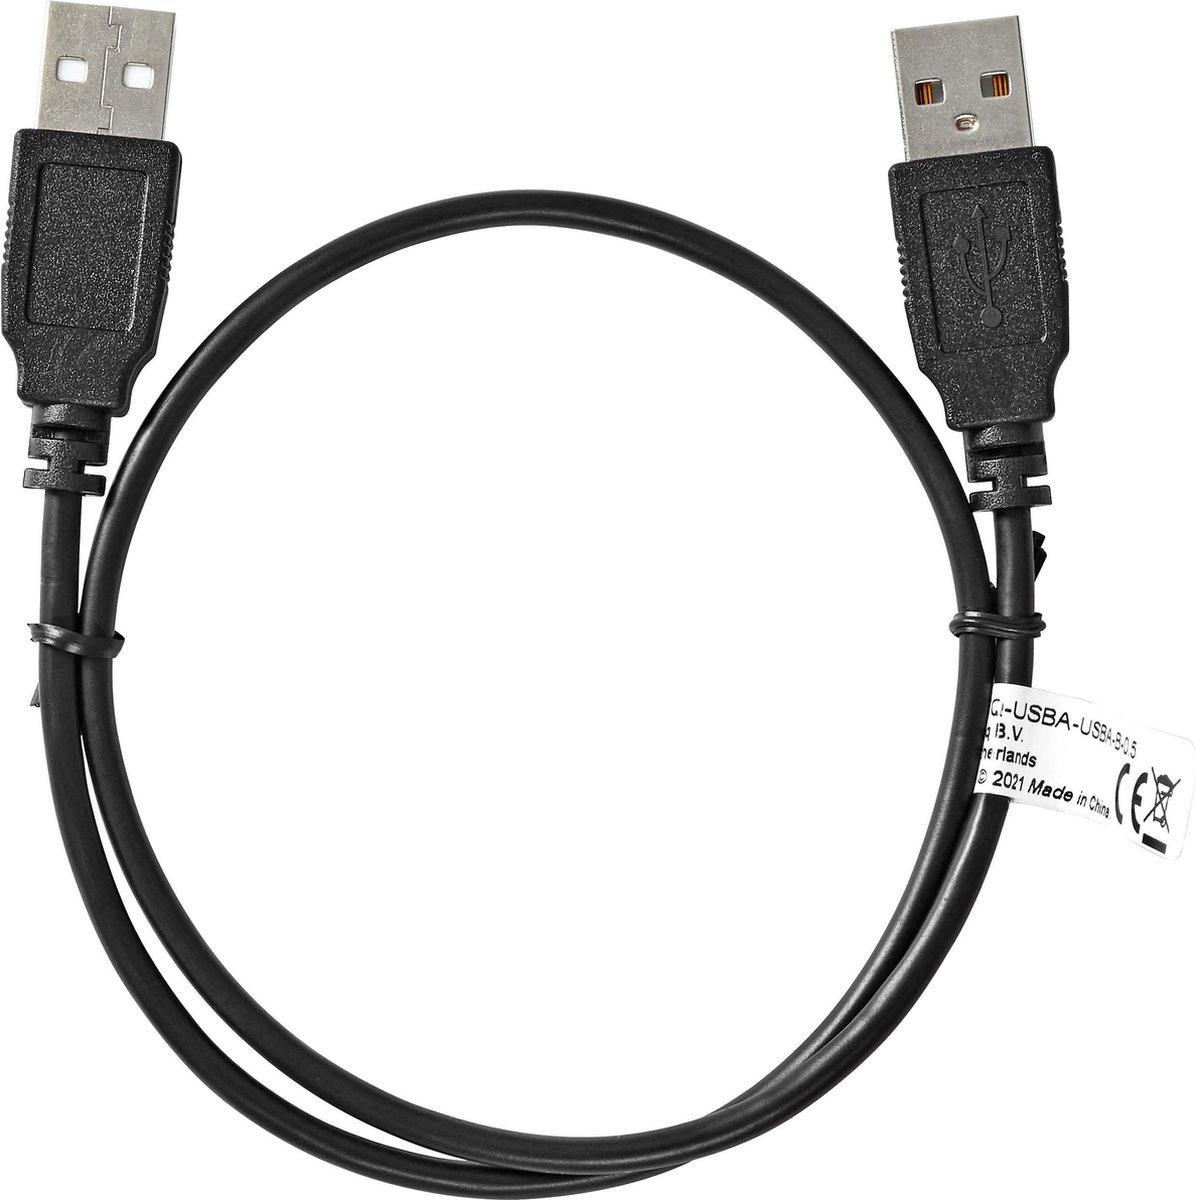 USB A kabel - USB 2.0 Kabel - USB A Male naar USB A male- 1.8 meter - Zwart  - Allteq | bol.com